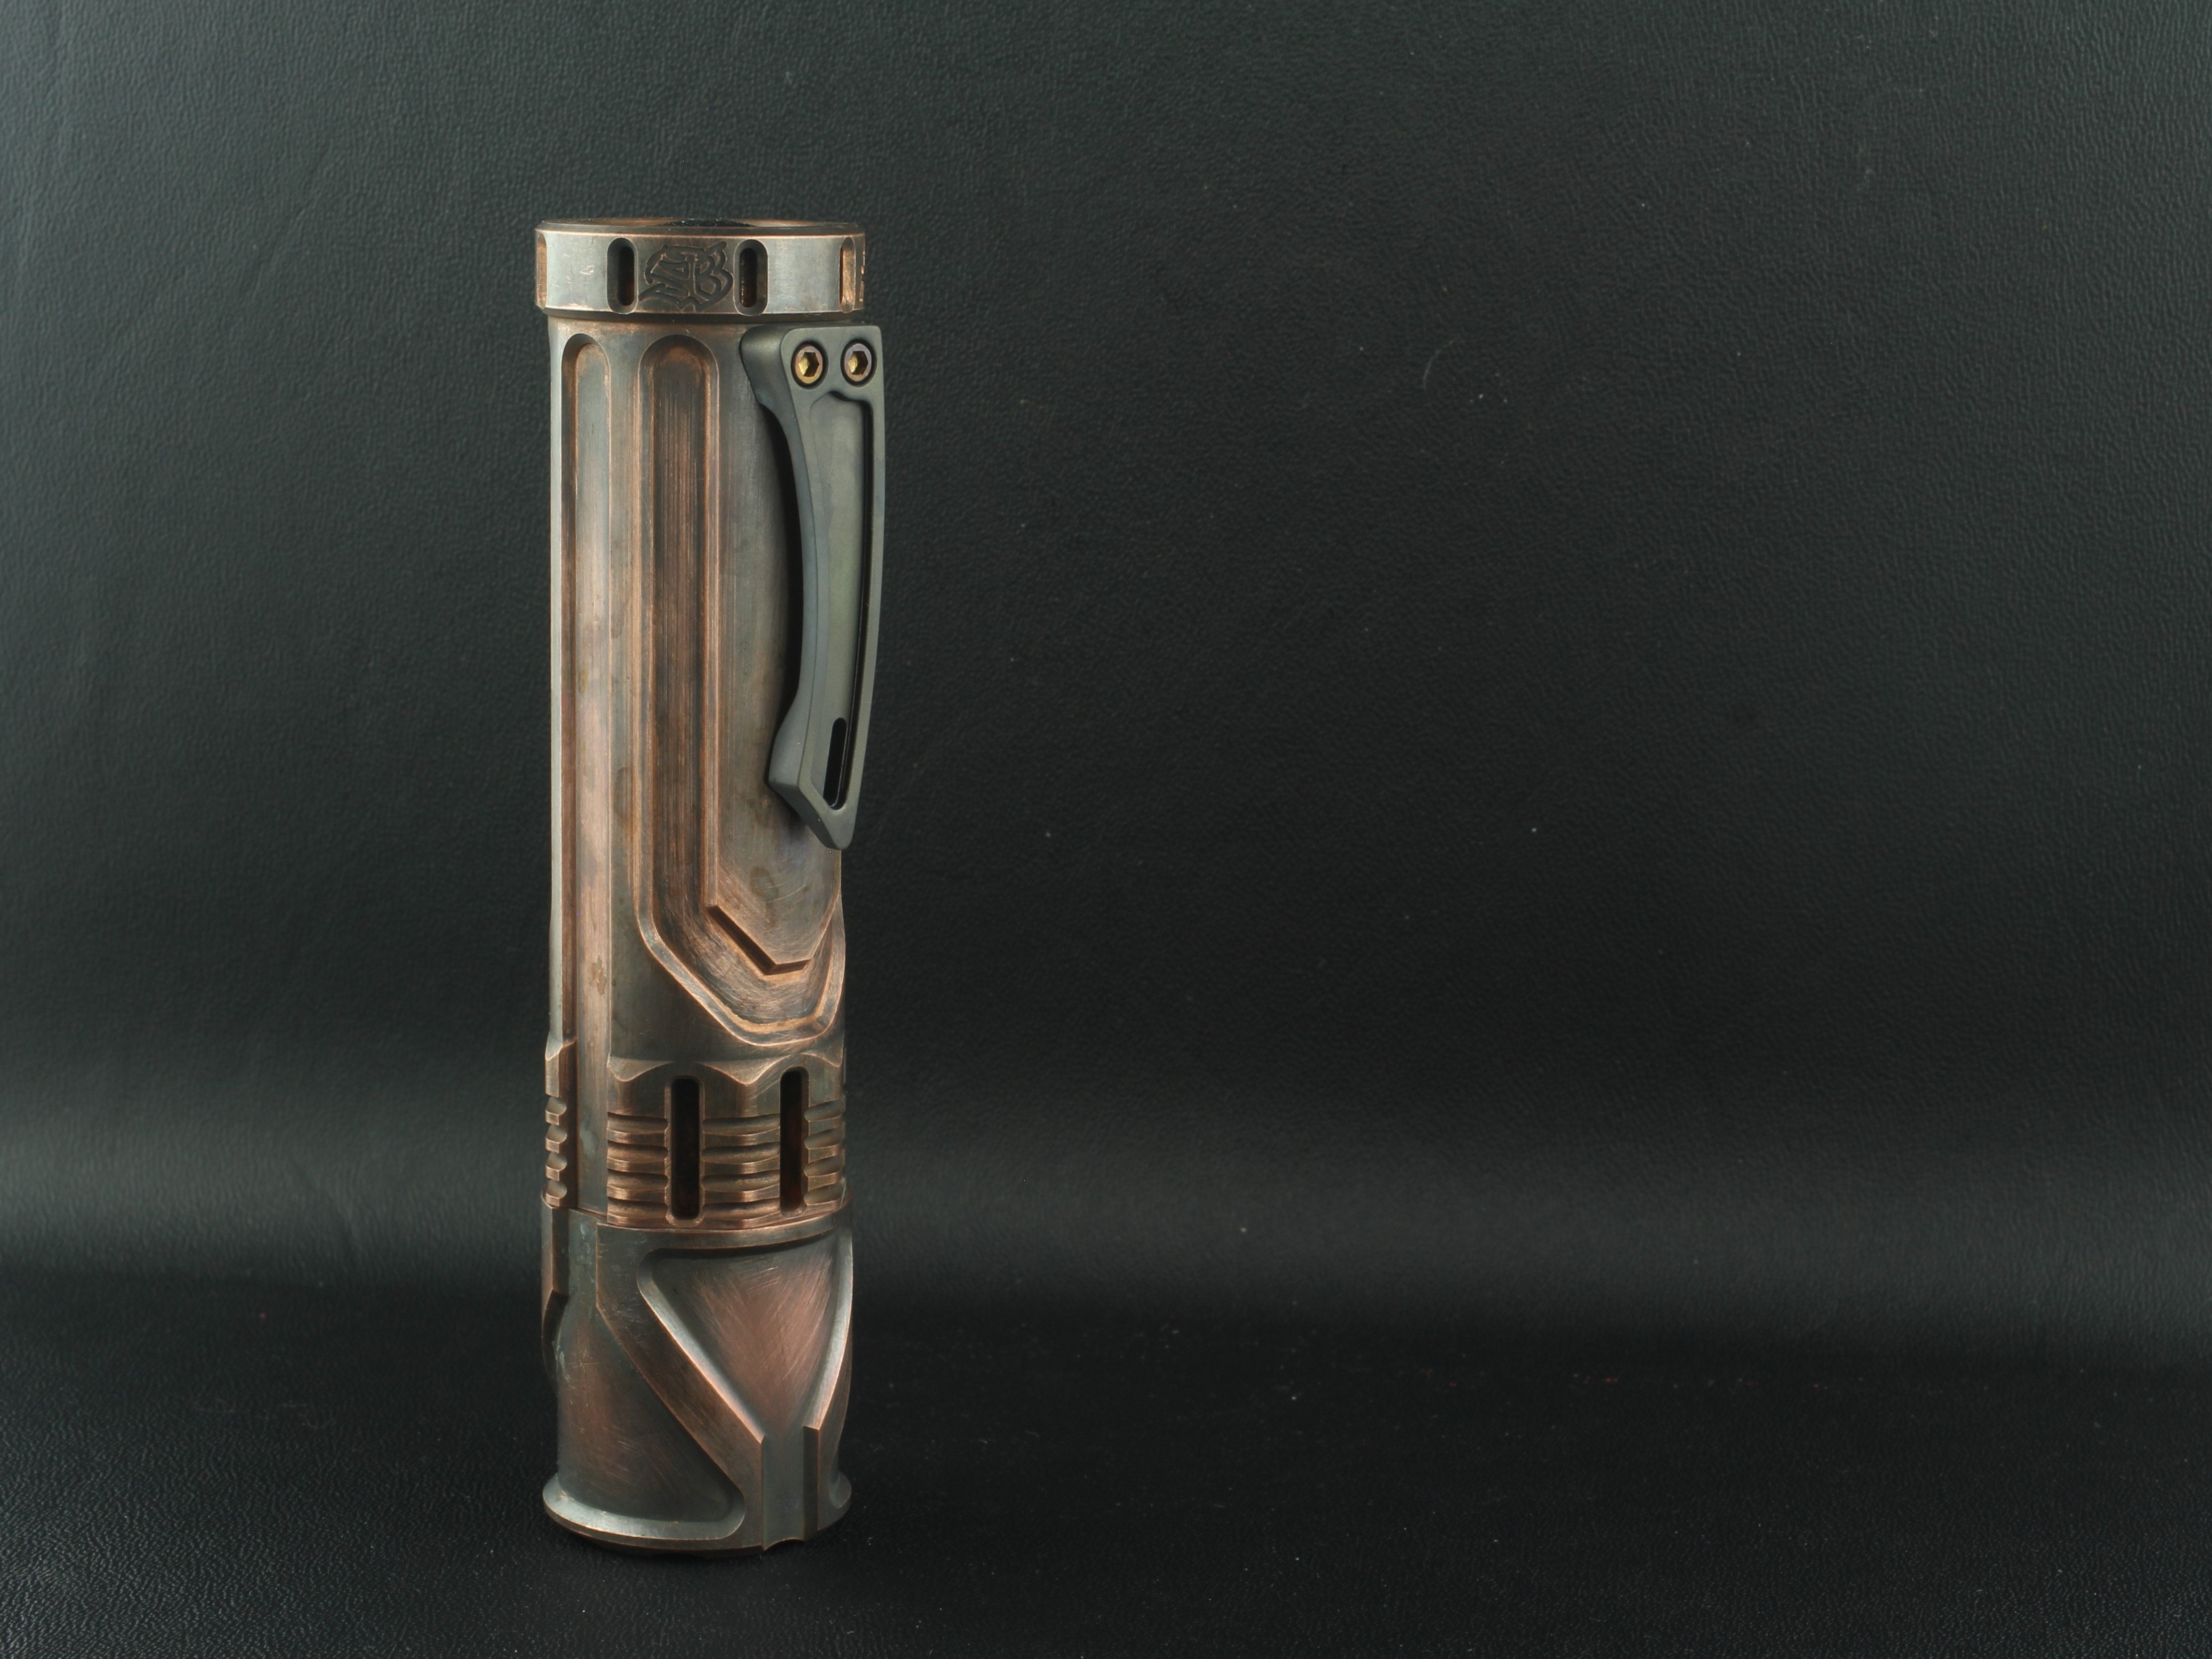 Cylon - Copper antiqued finish